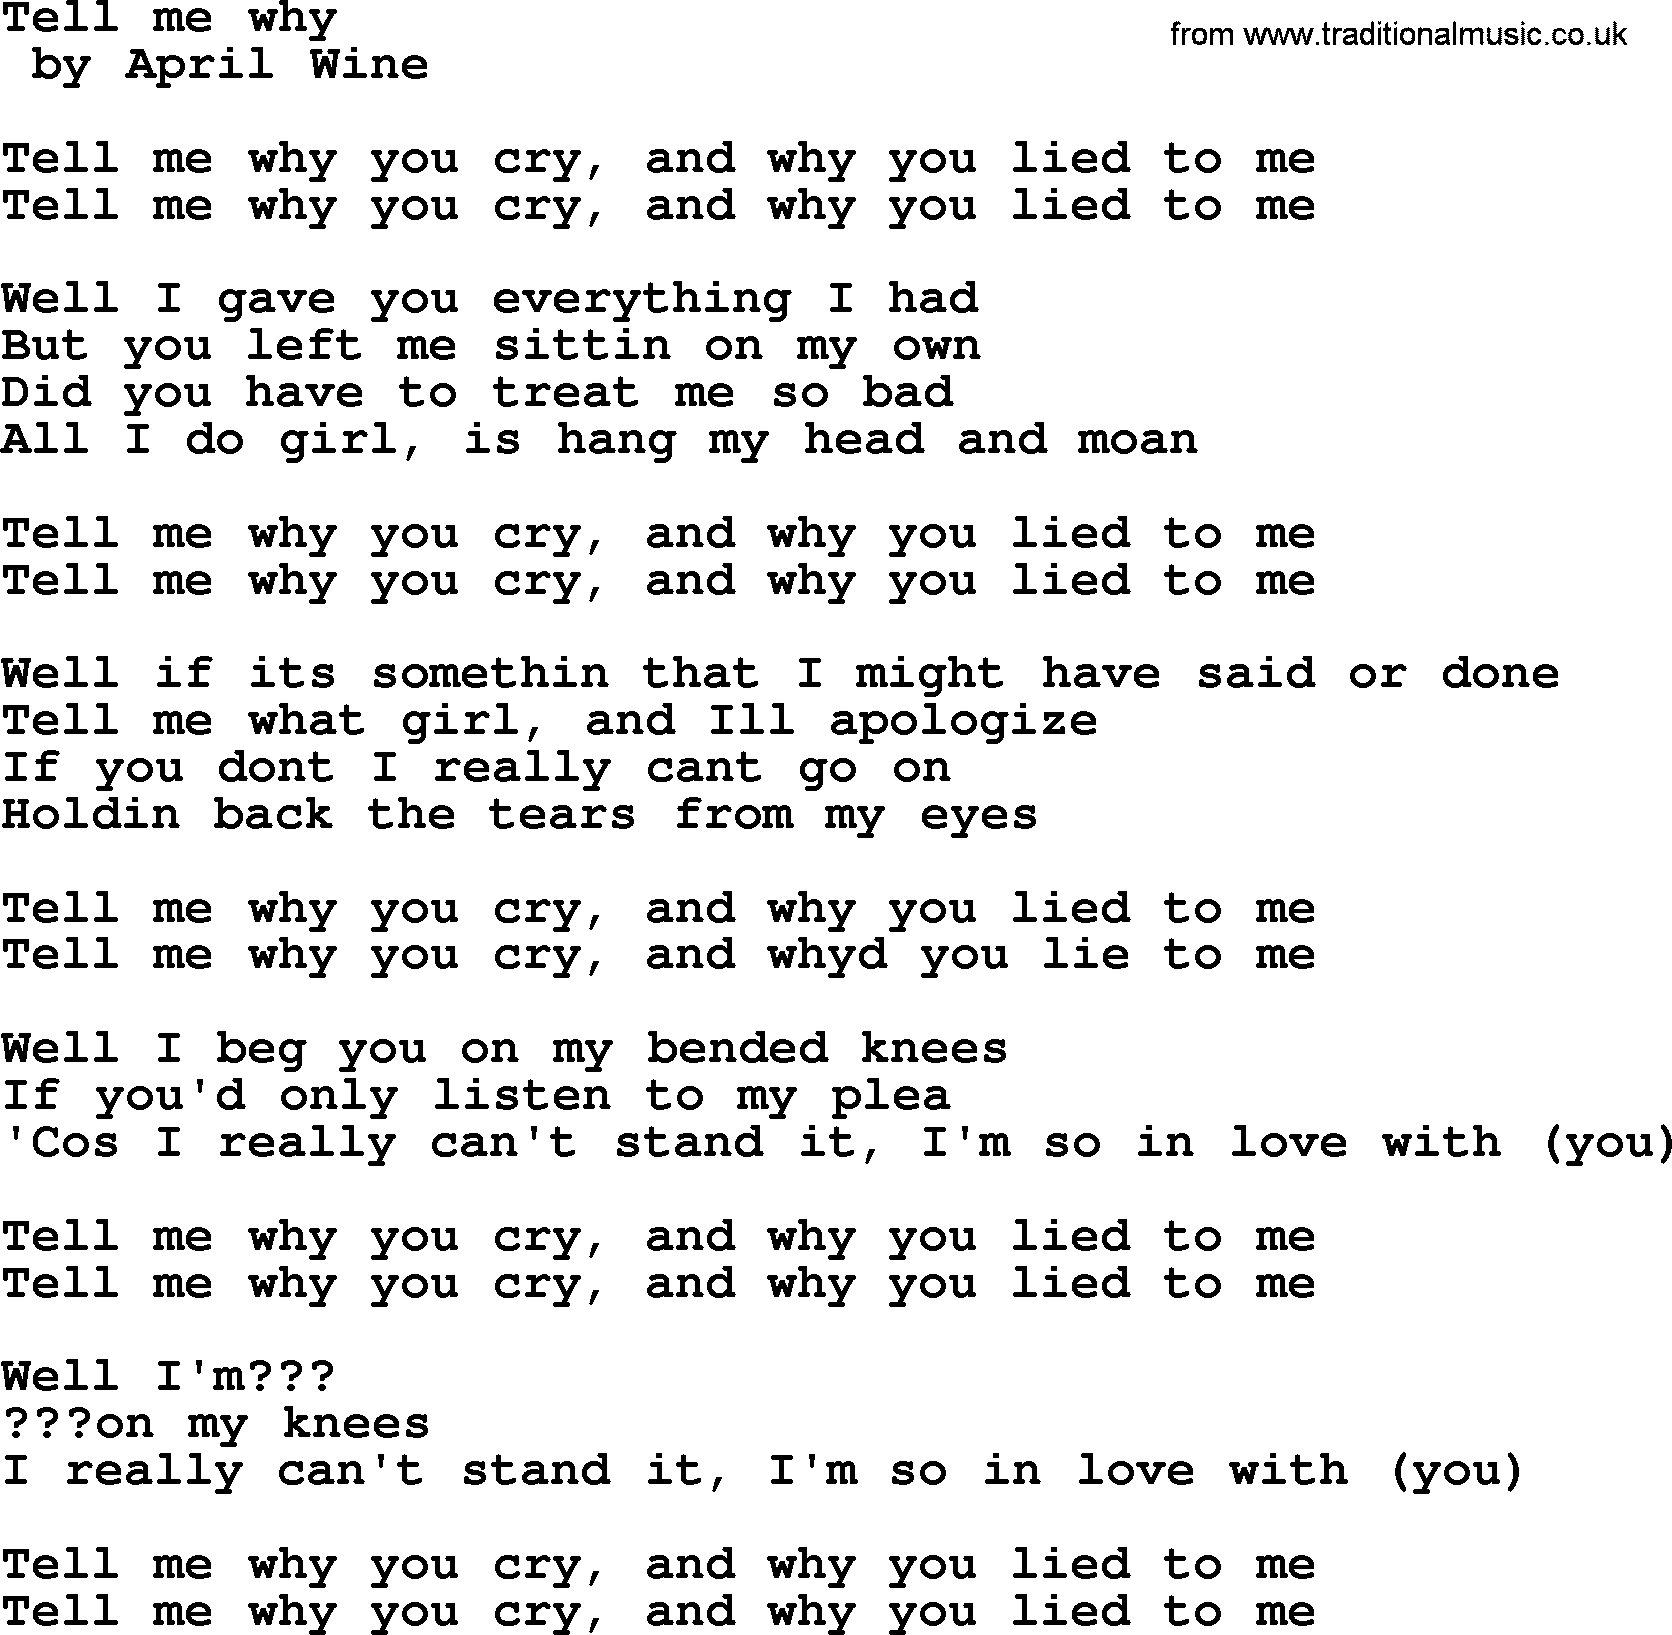 Bruce Springsteen song: Tell Me Why, lyrics